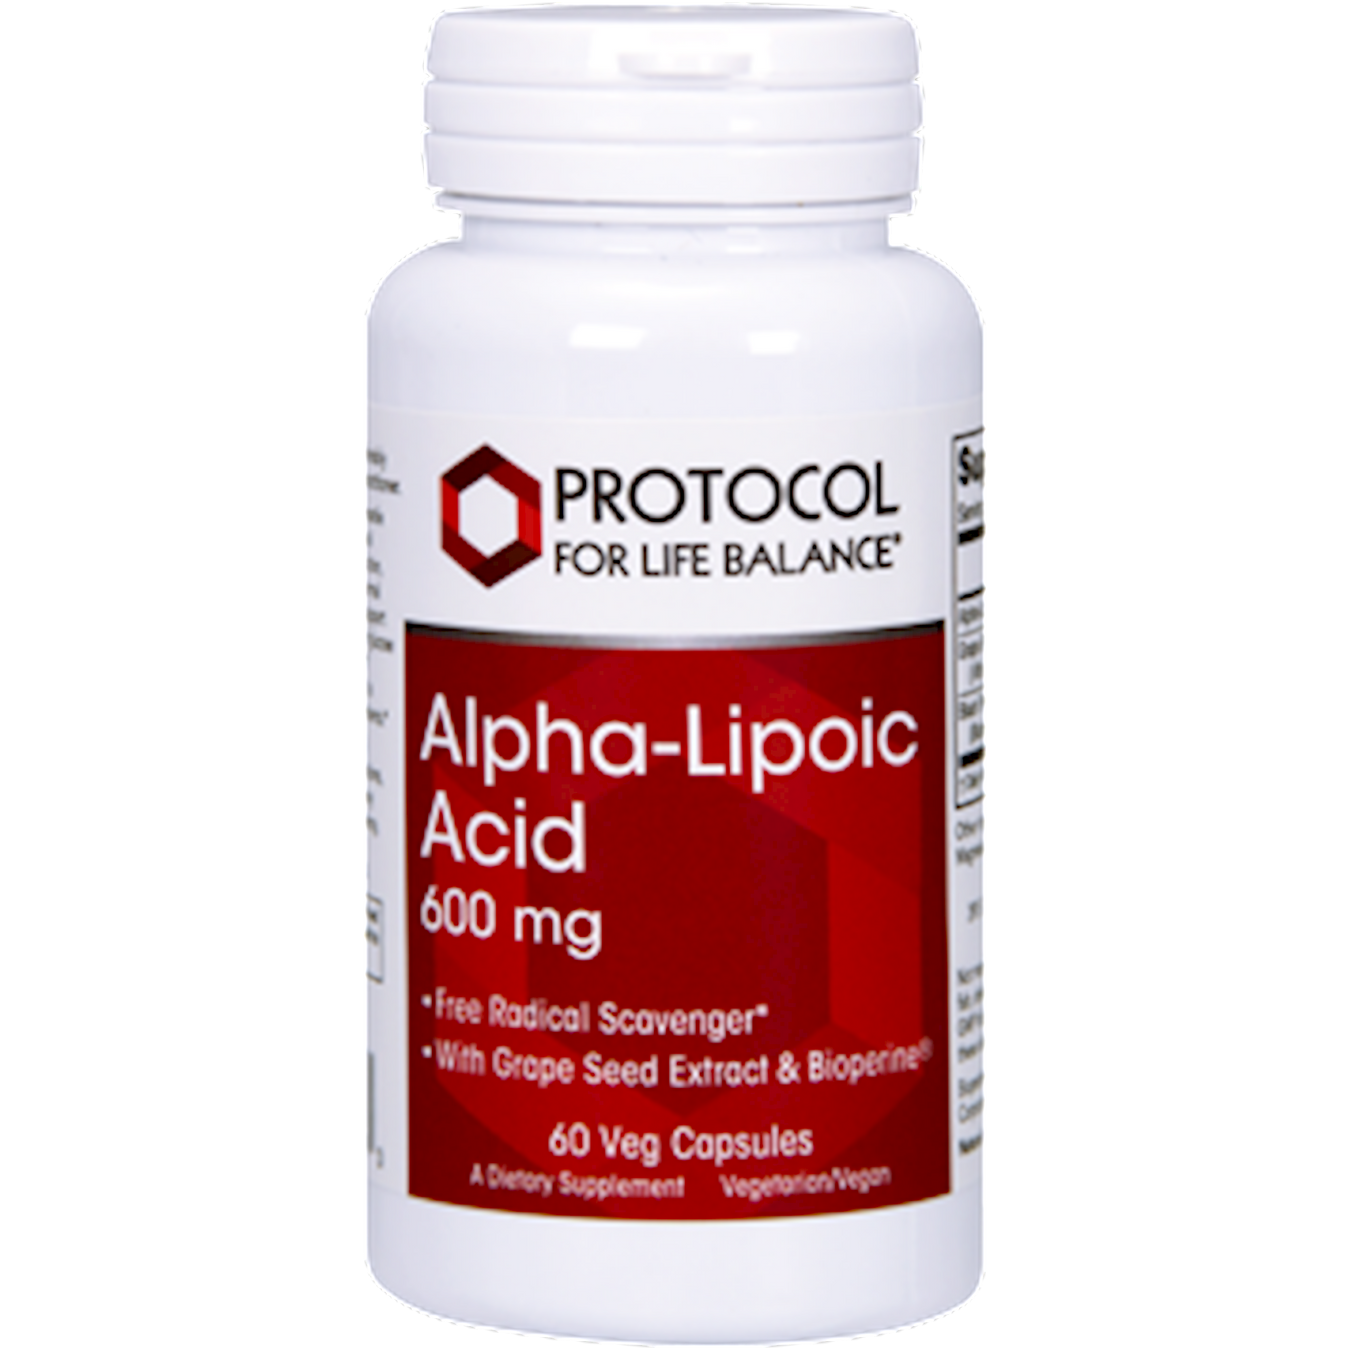 Alpha Lipoic Acid (ALA)